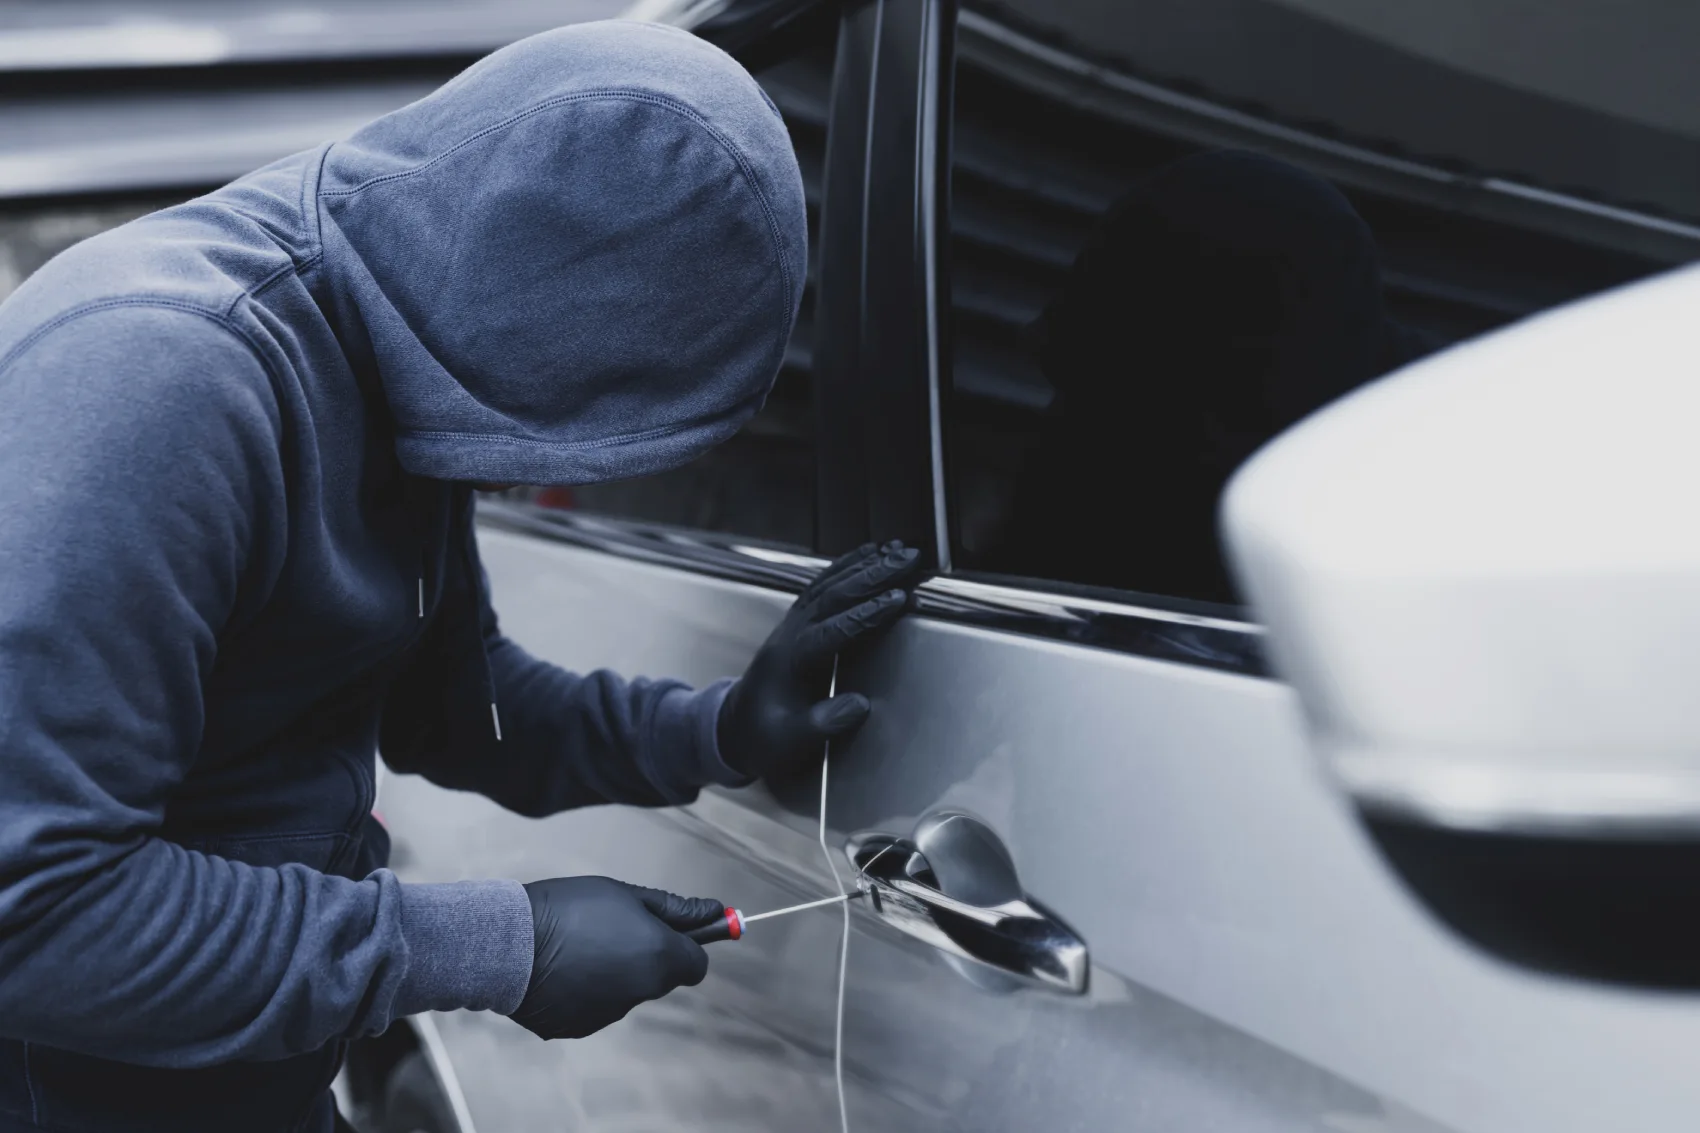 Los mejores sistemas antirrobo para asegurar tu coche - GNA seguros